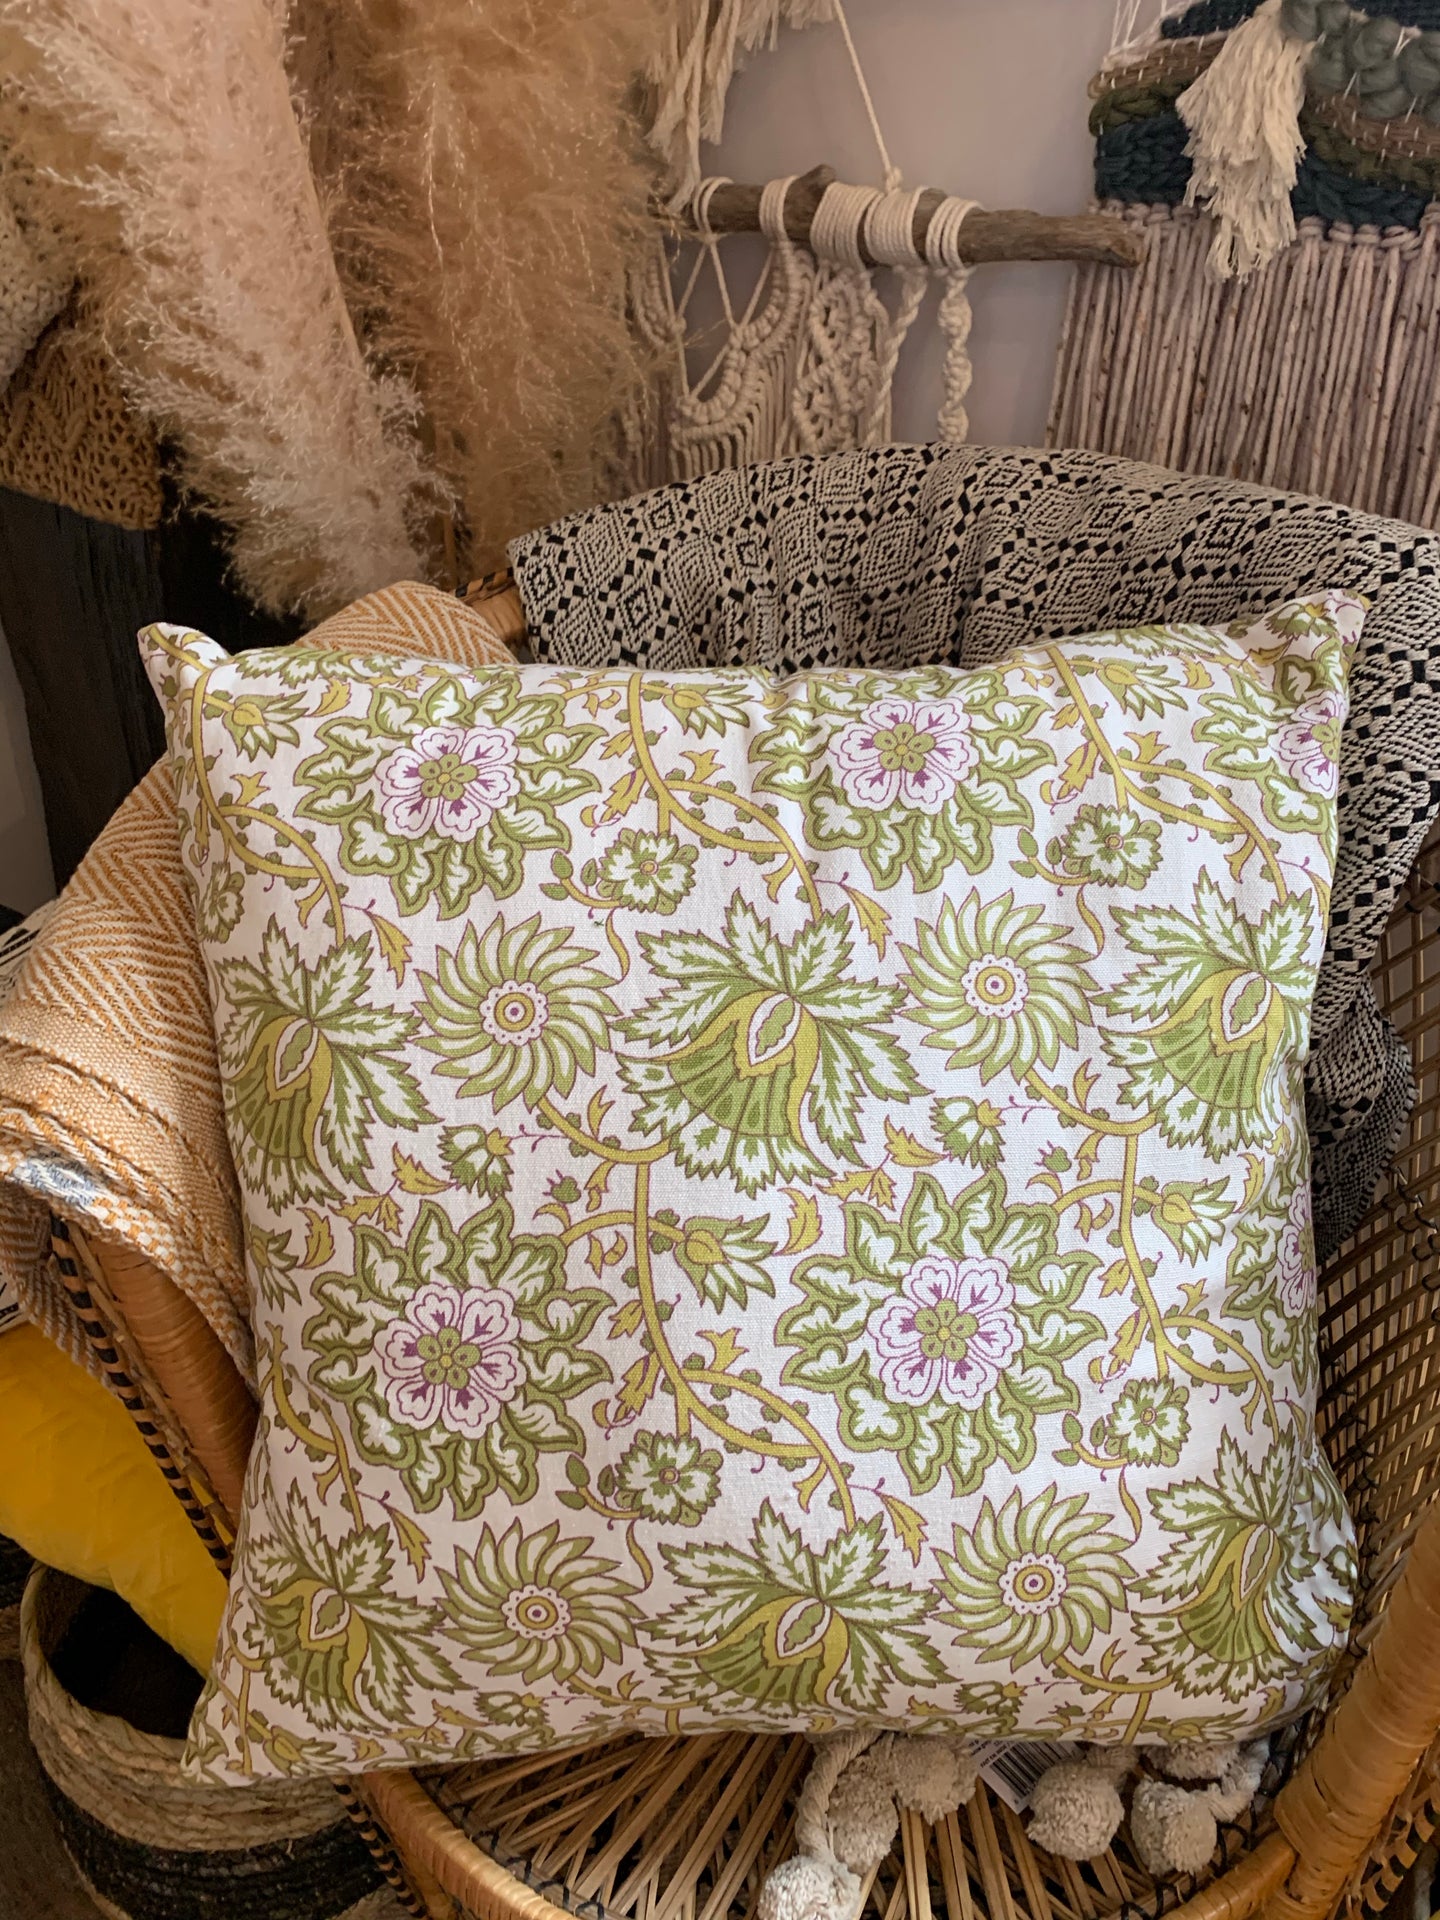 Floral Patterned Cotton Pillows